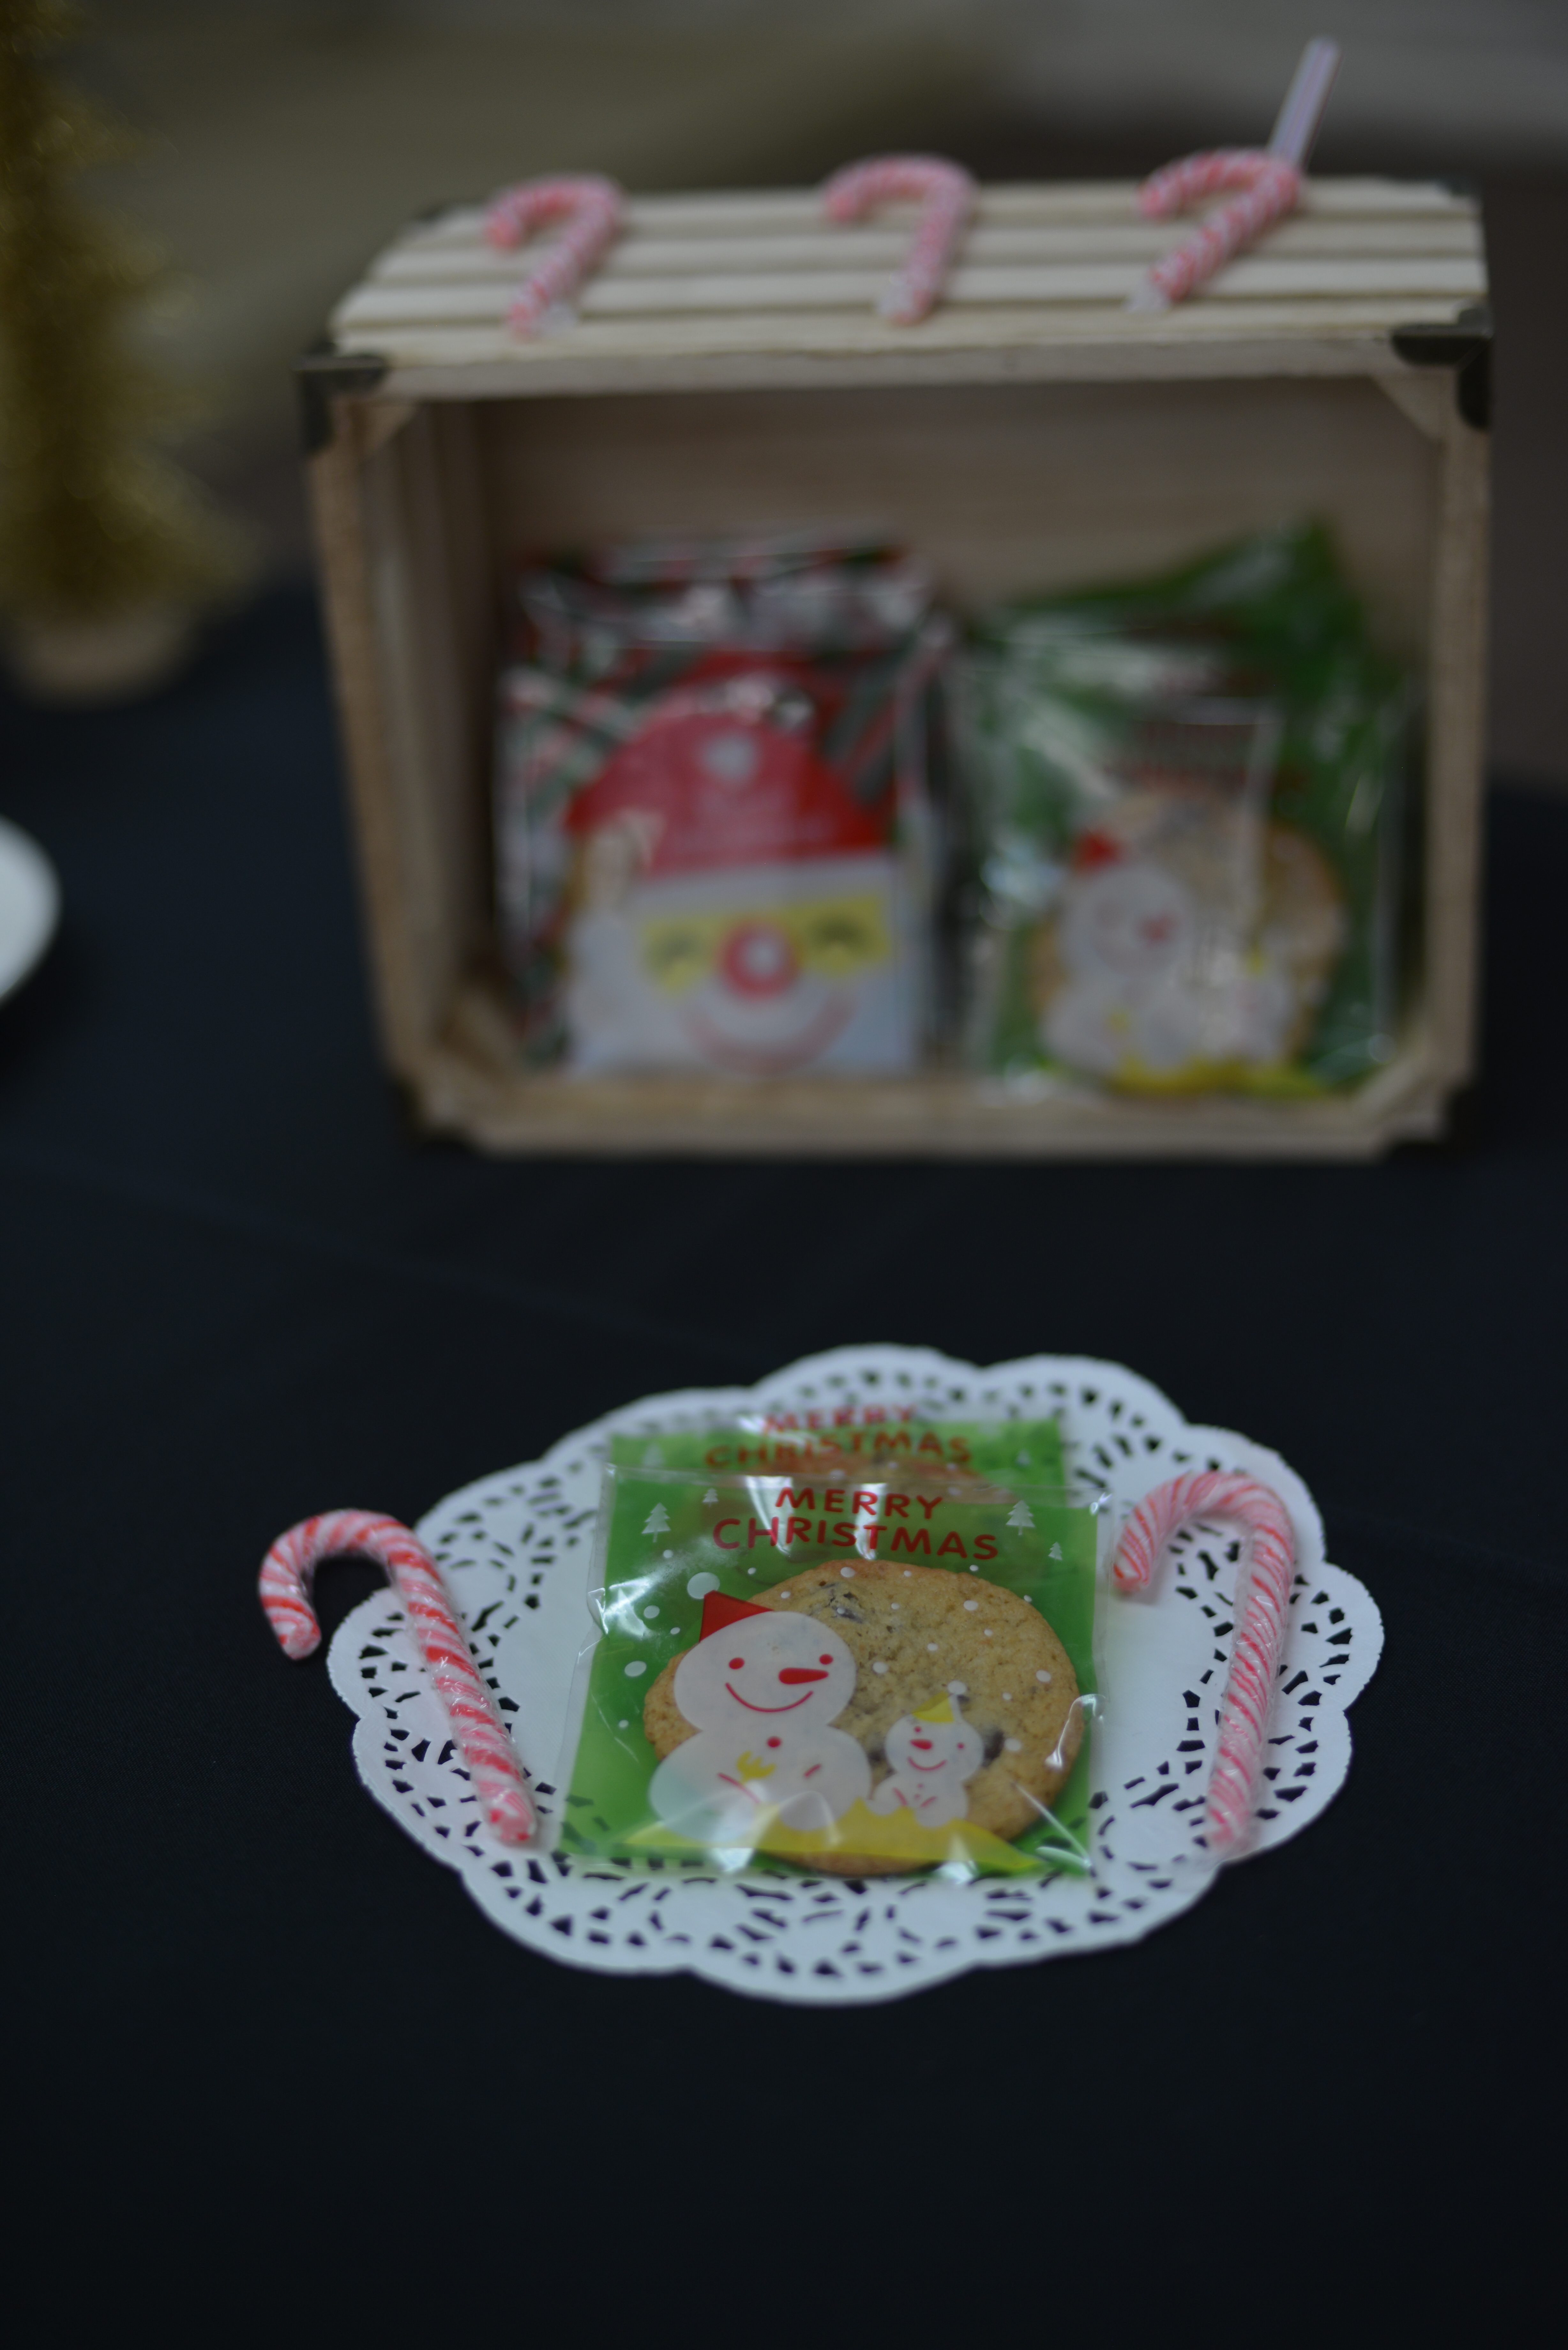 Cookies with Santa Key Biscayne: Event Recap